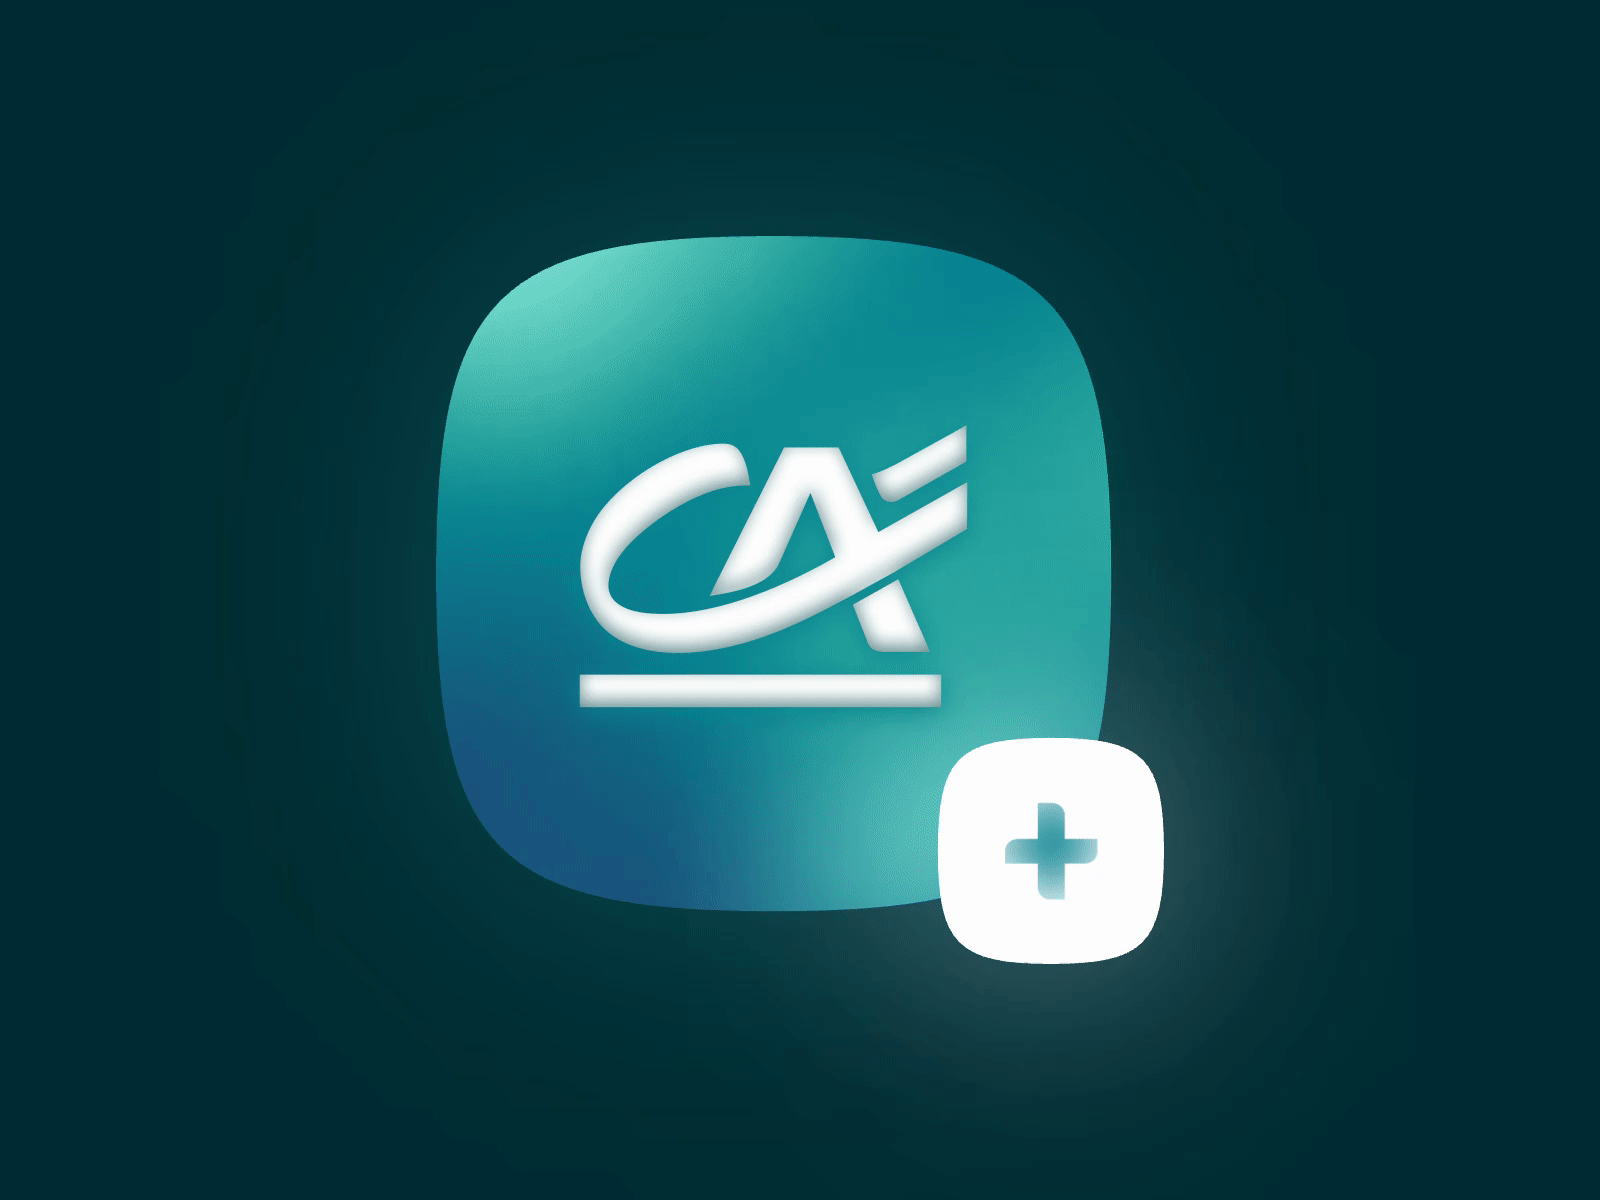 CA+ Logo animation animation branding logo motion graphics